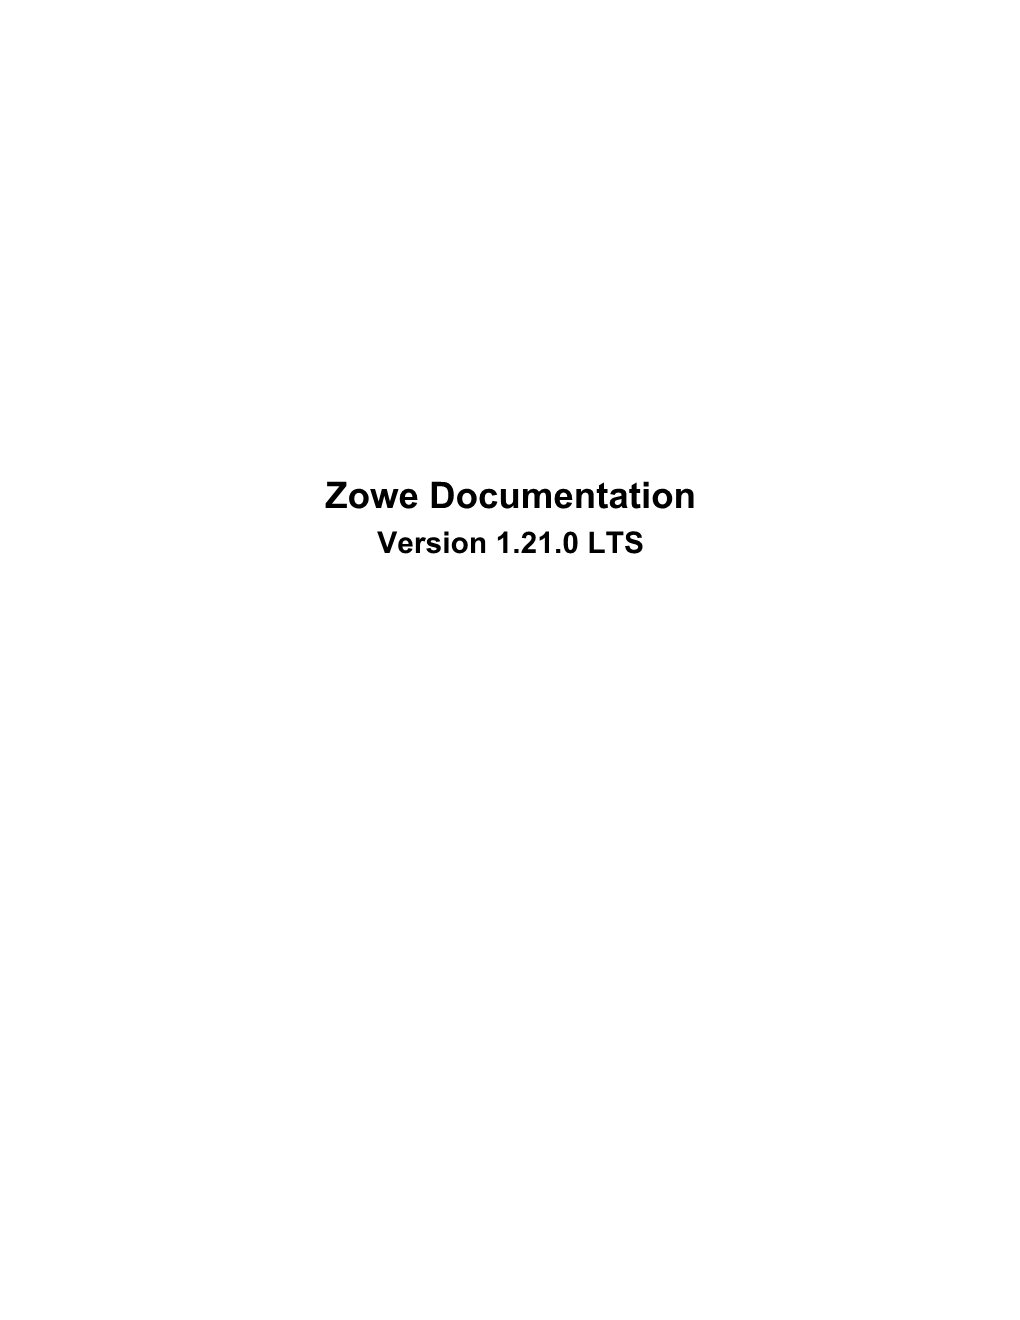 Zowe Documentation Version 1.21.0 LTS